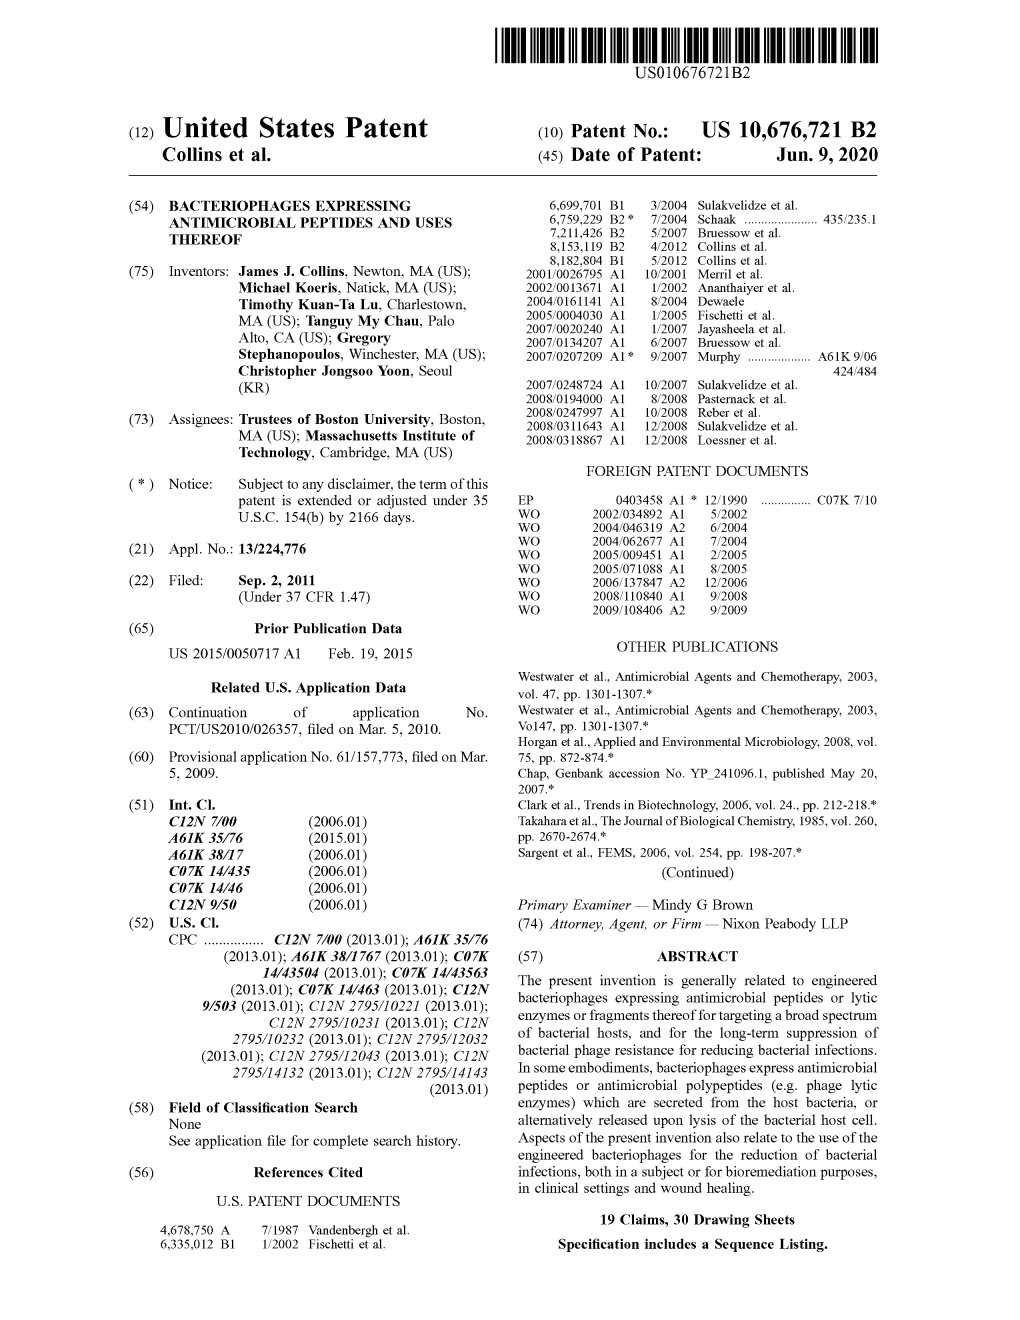 United States Patent ( 10 ) Patent No.: US 10,676,721 B2 Collins Et Al